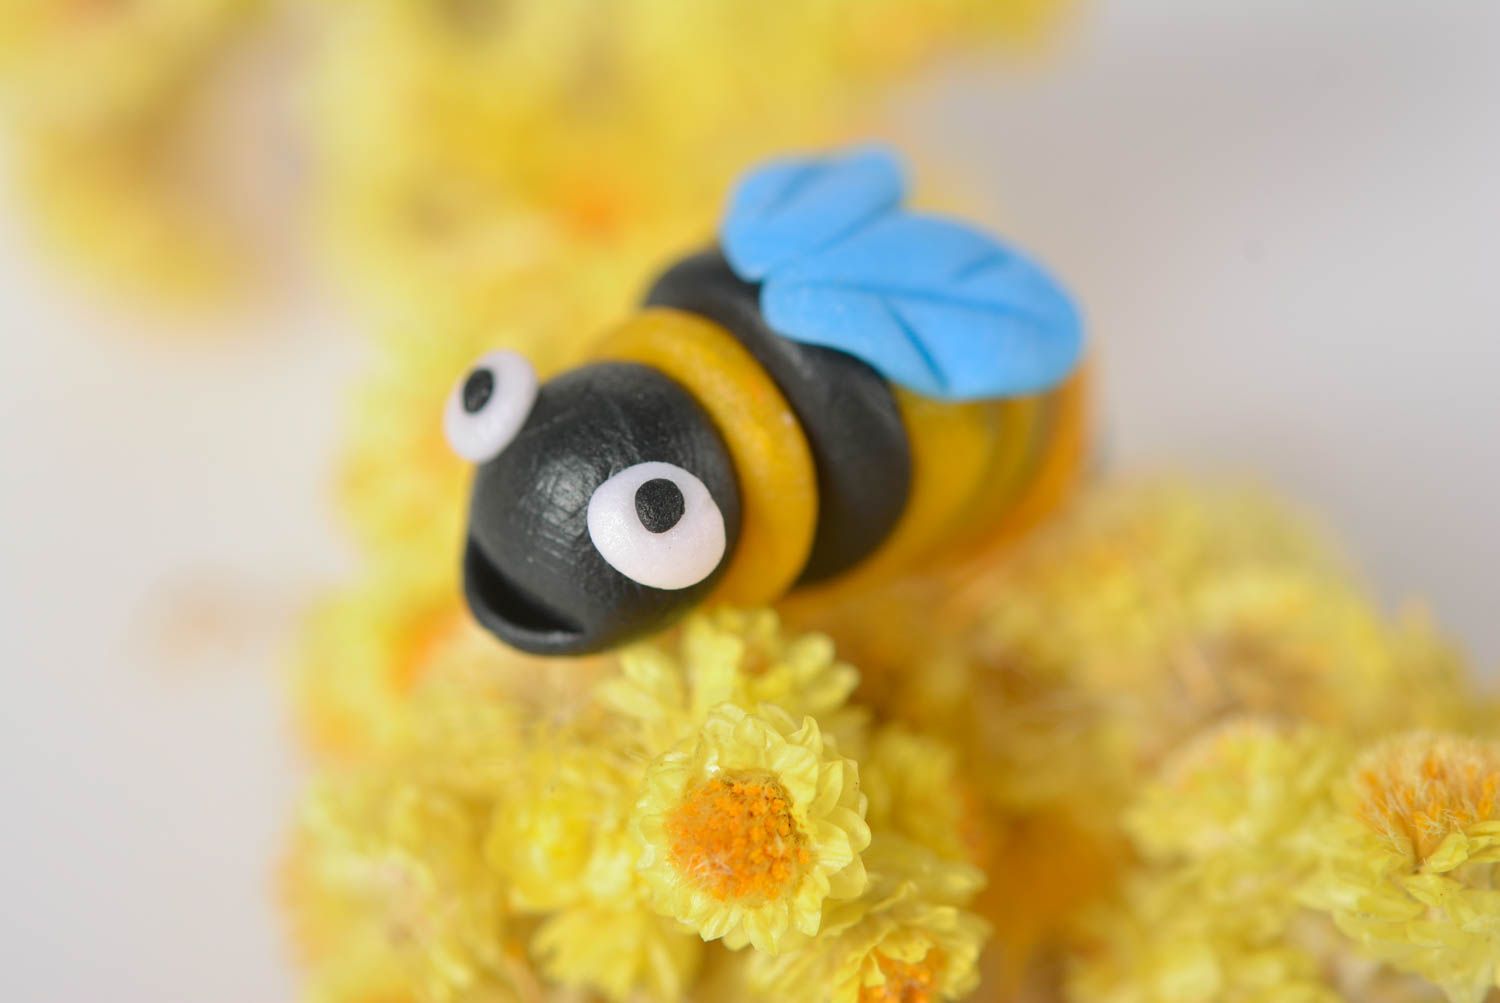 Ceramic handmade figurine unusual home decor ideas cute toy bee interior decor photo 1